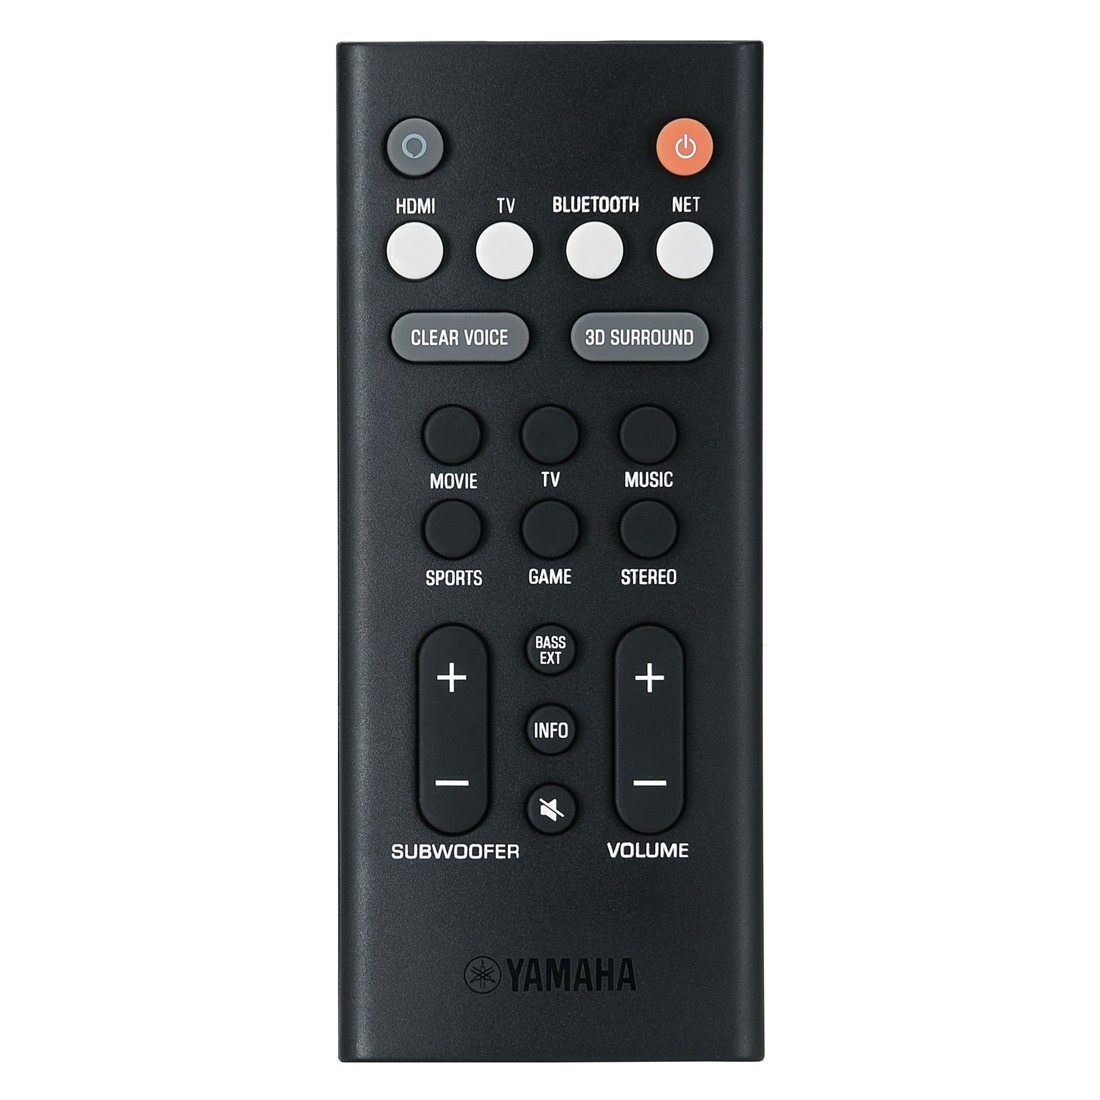 Yamaha YAS-109 Sound Bar Remote